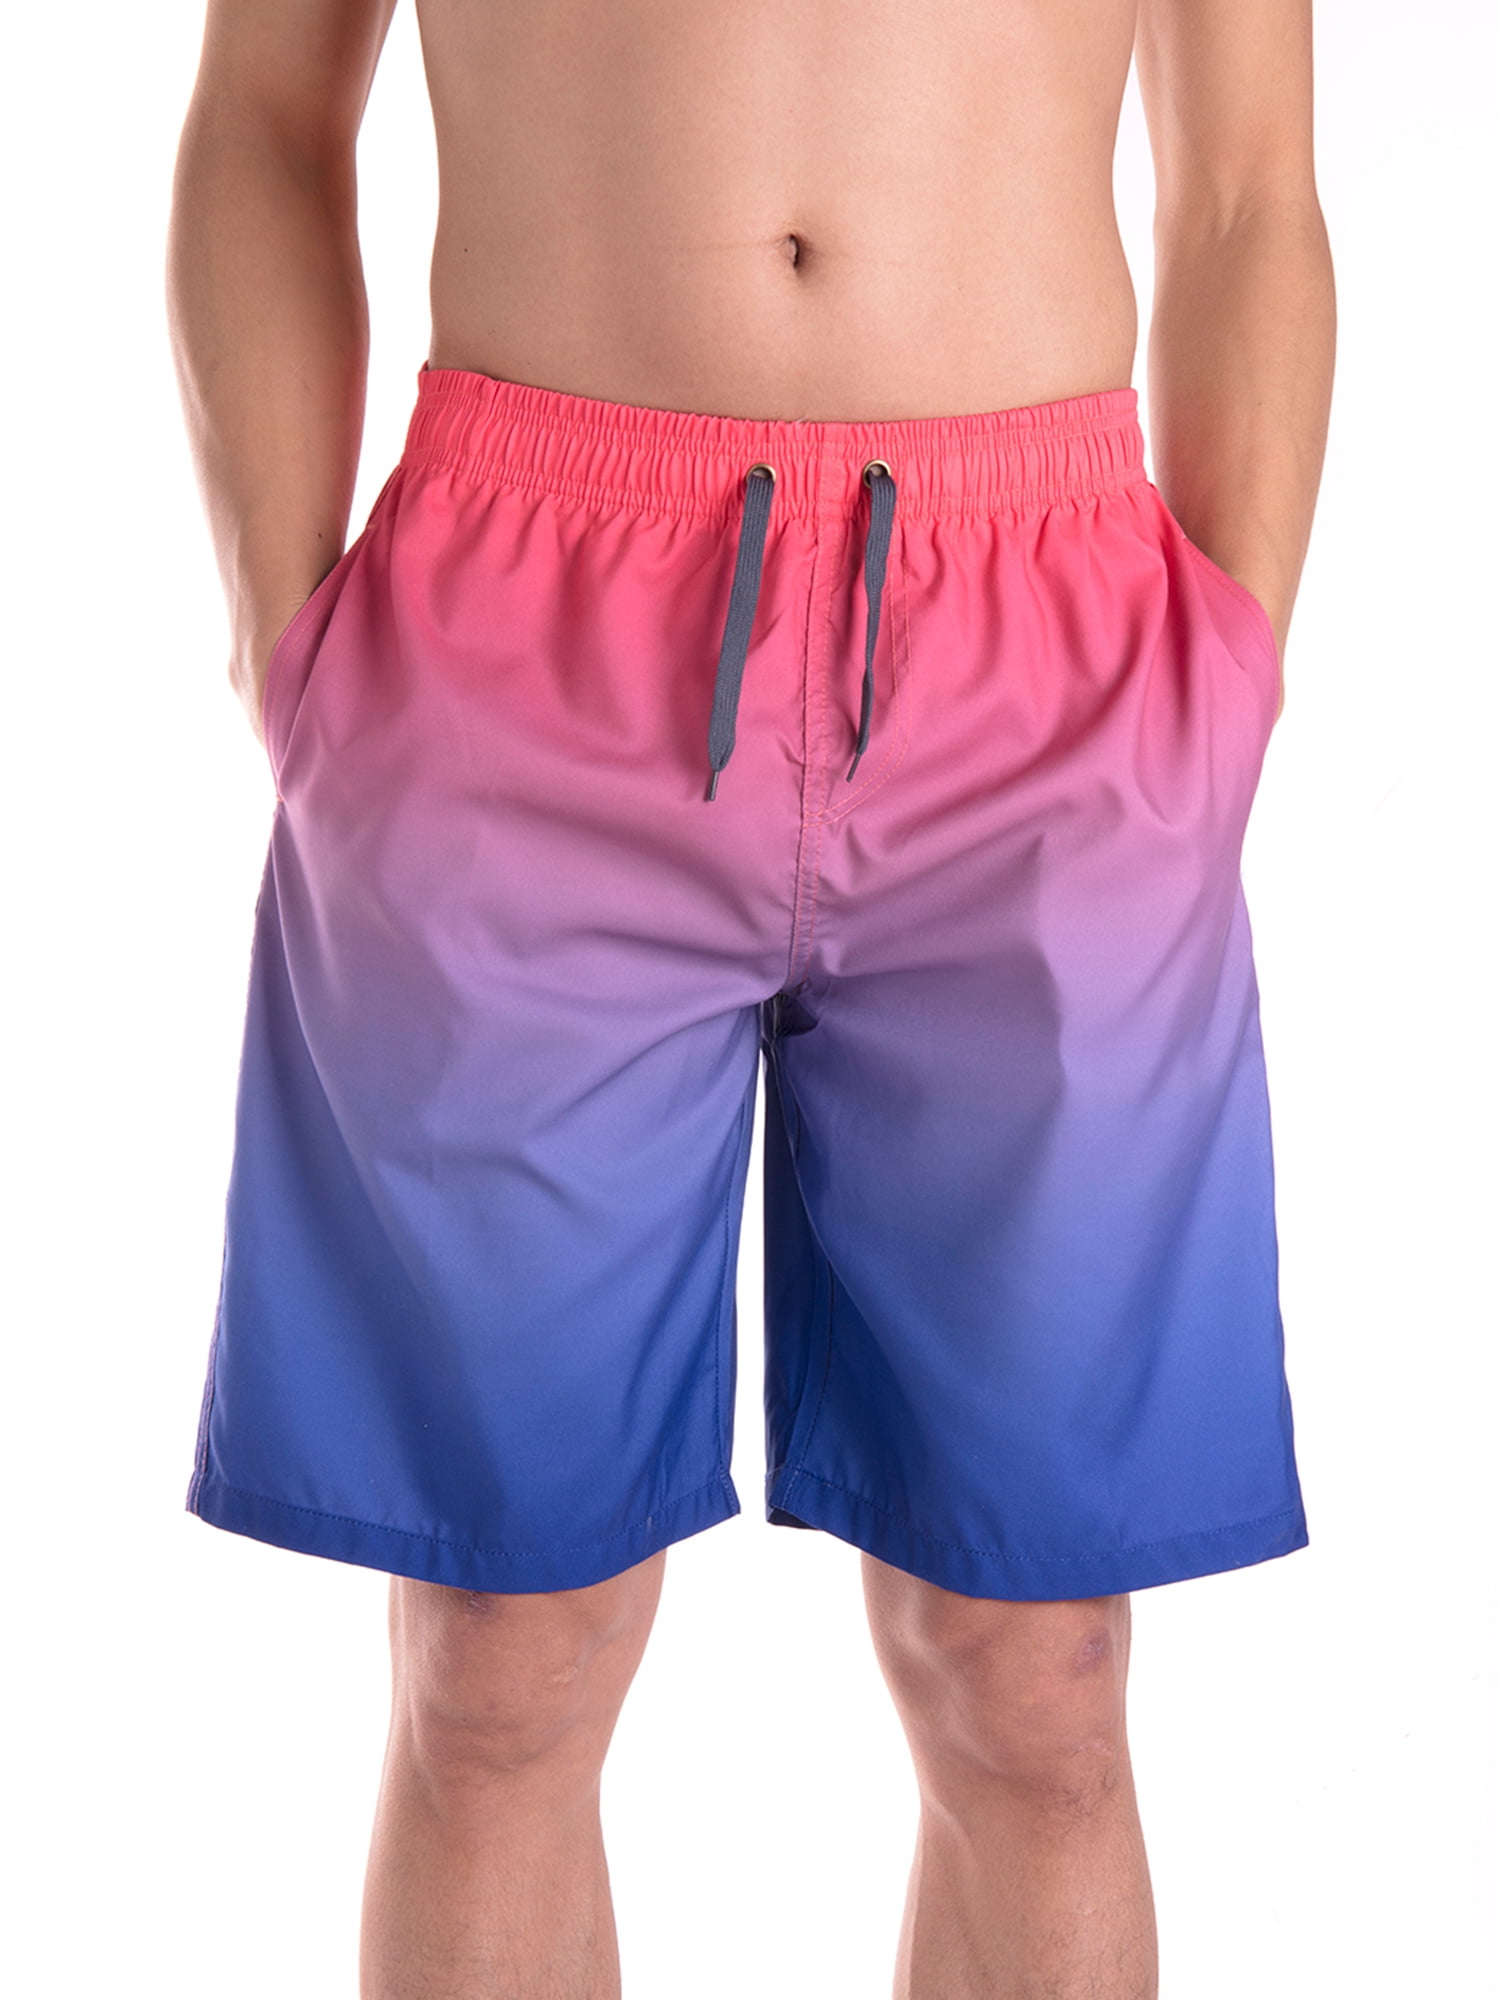 SAYFUT - Dry Fit Shorts Board Shorts Swim Trunks,Beach Surfing Running ...